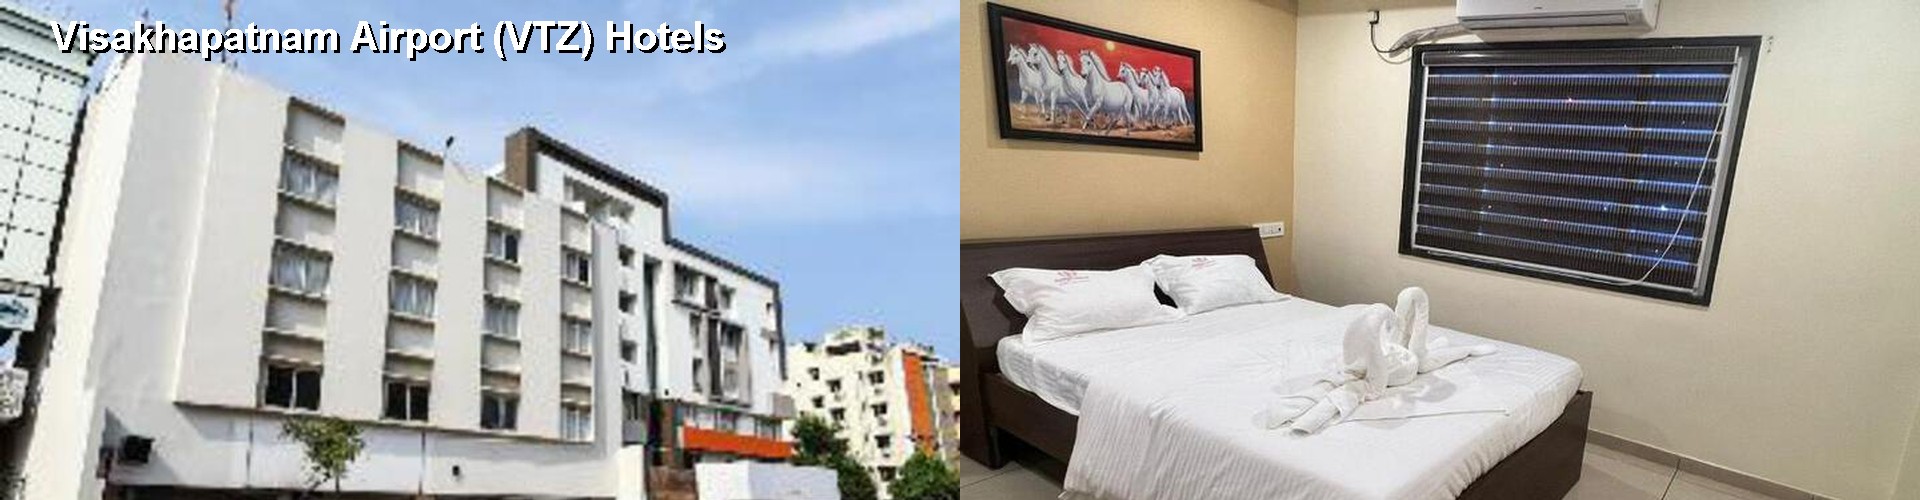 4 Best Hotels near Visakhapatnam Airport (VTZ)